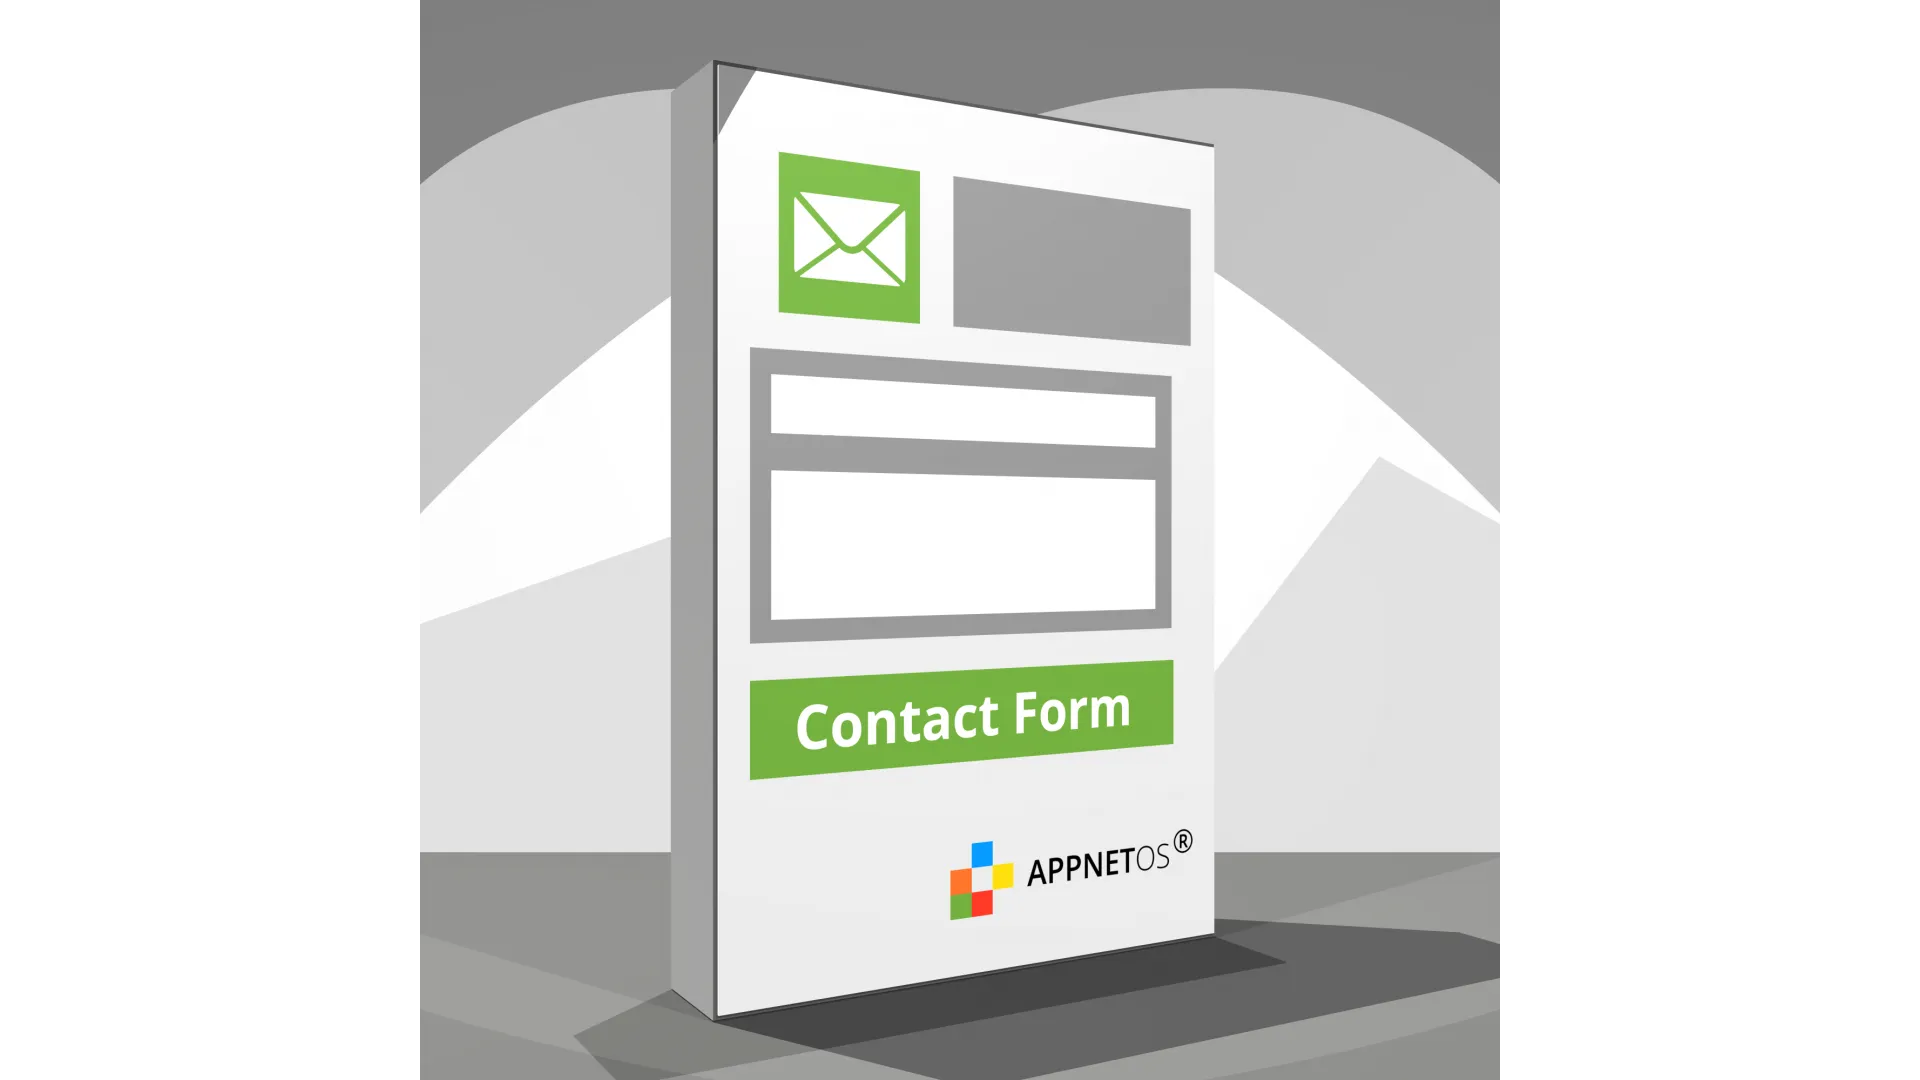 APPNET OS Contact form